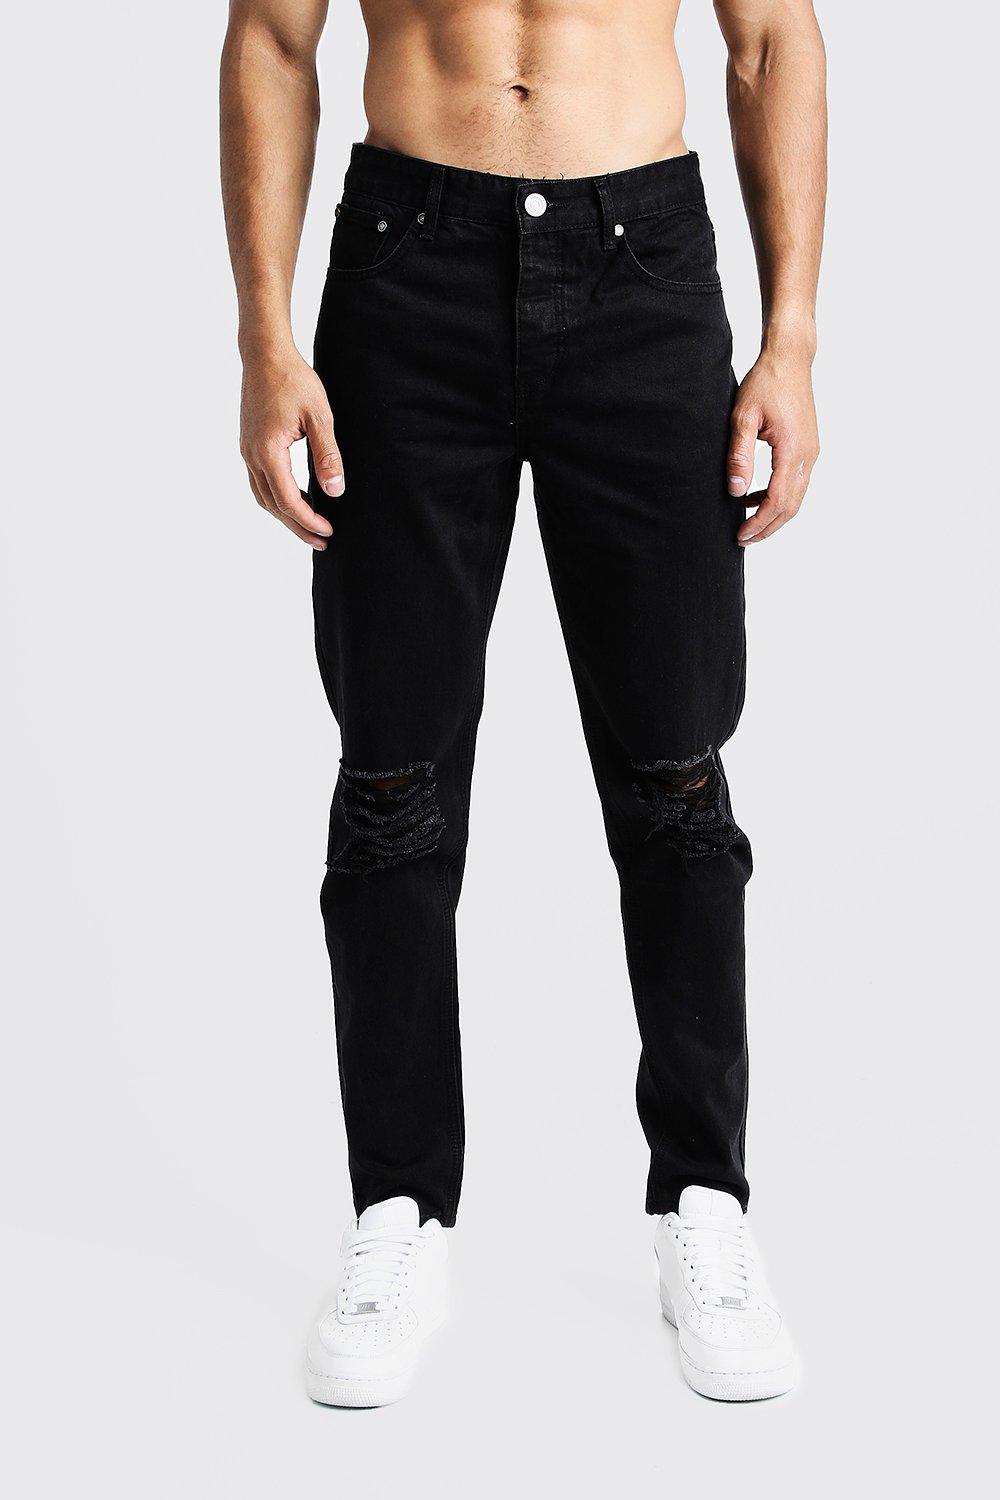 mens black tapered jeans